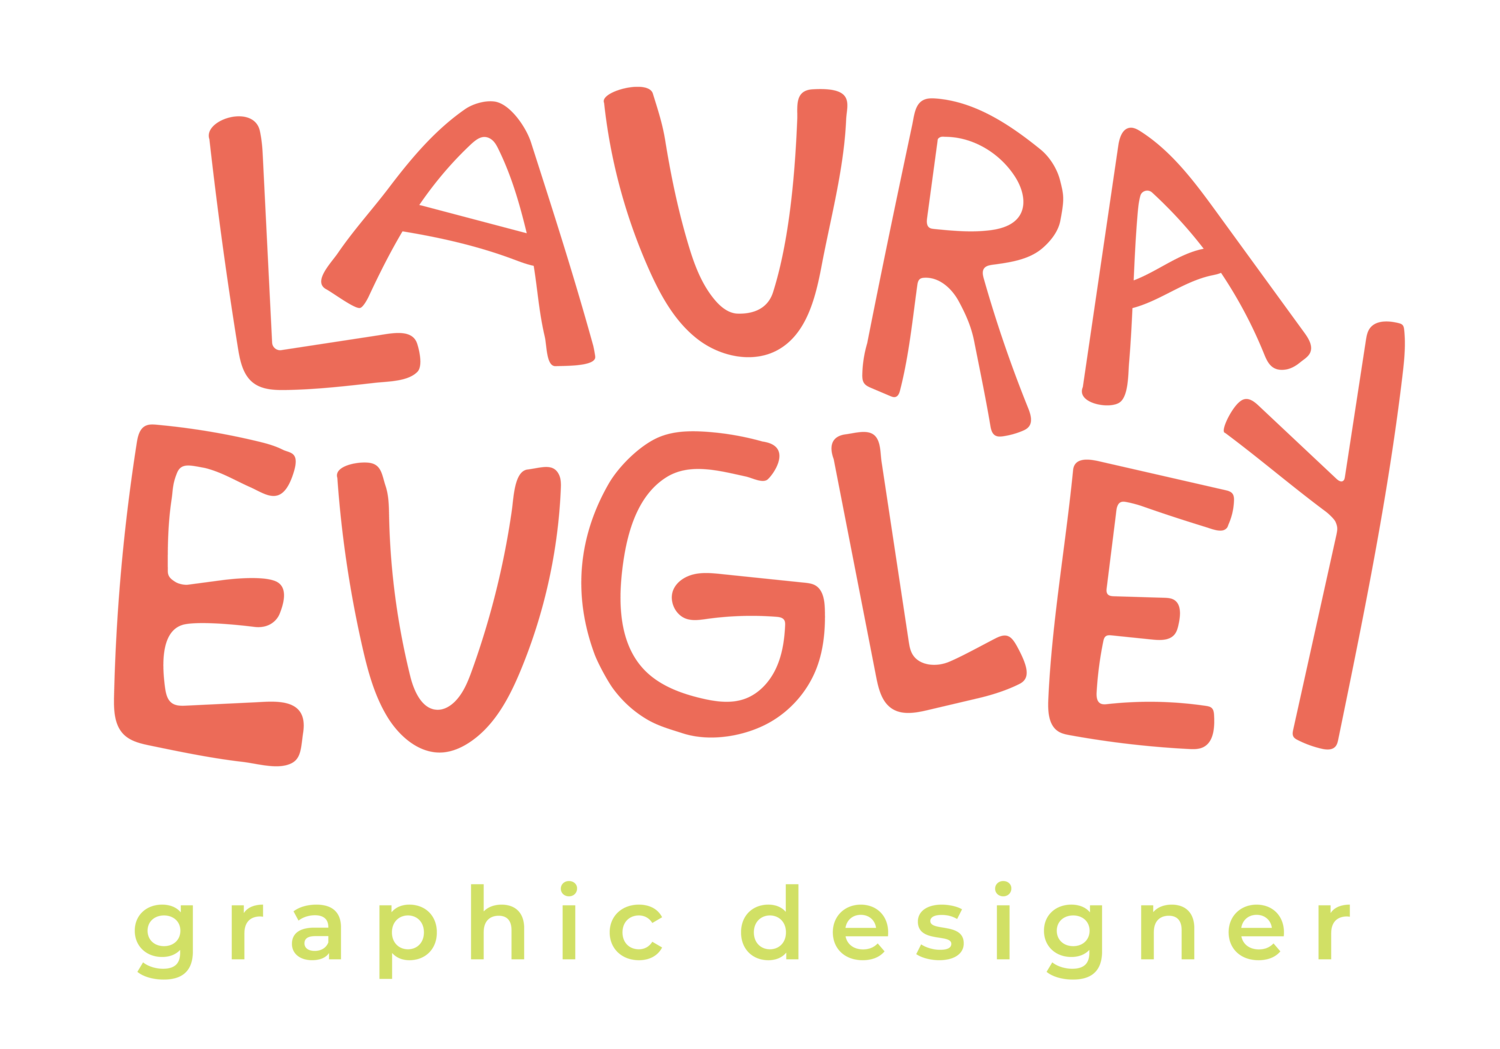 Laura Eugley Design